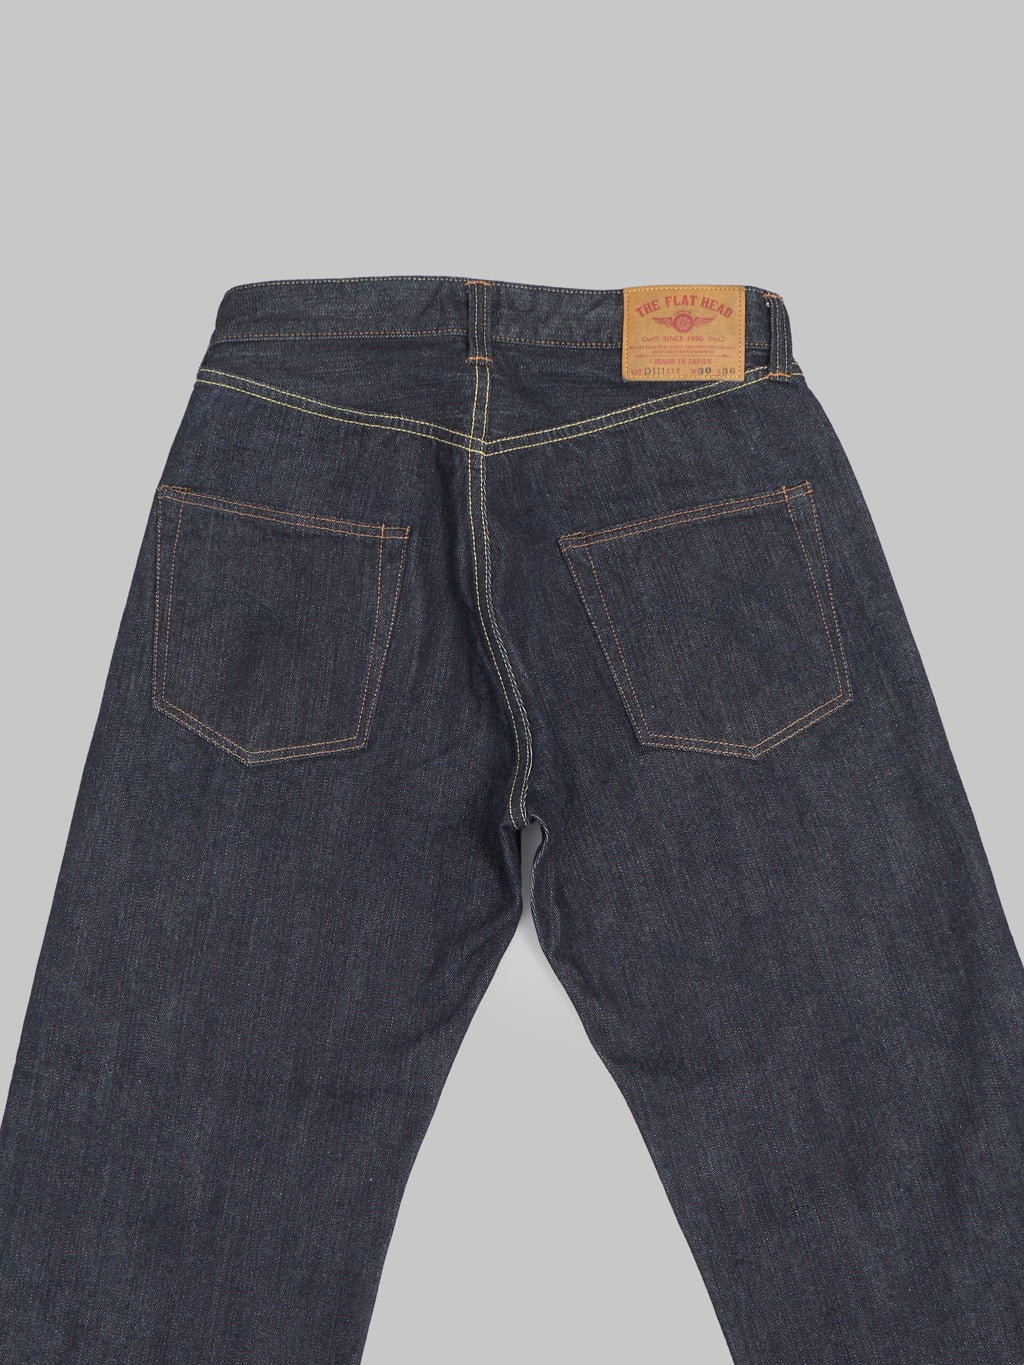 the flat head fn d111 wide straight selvedge denim jeans back pockets